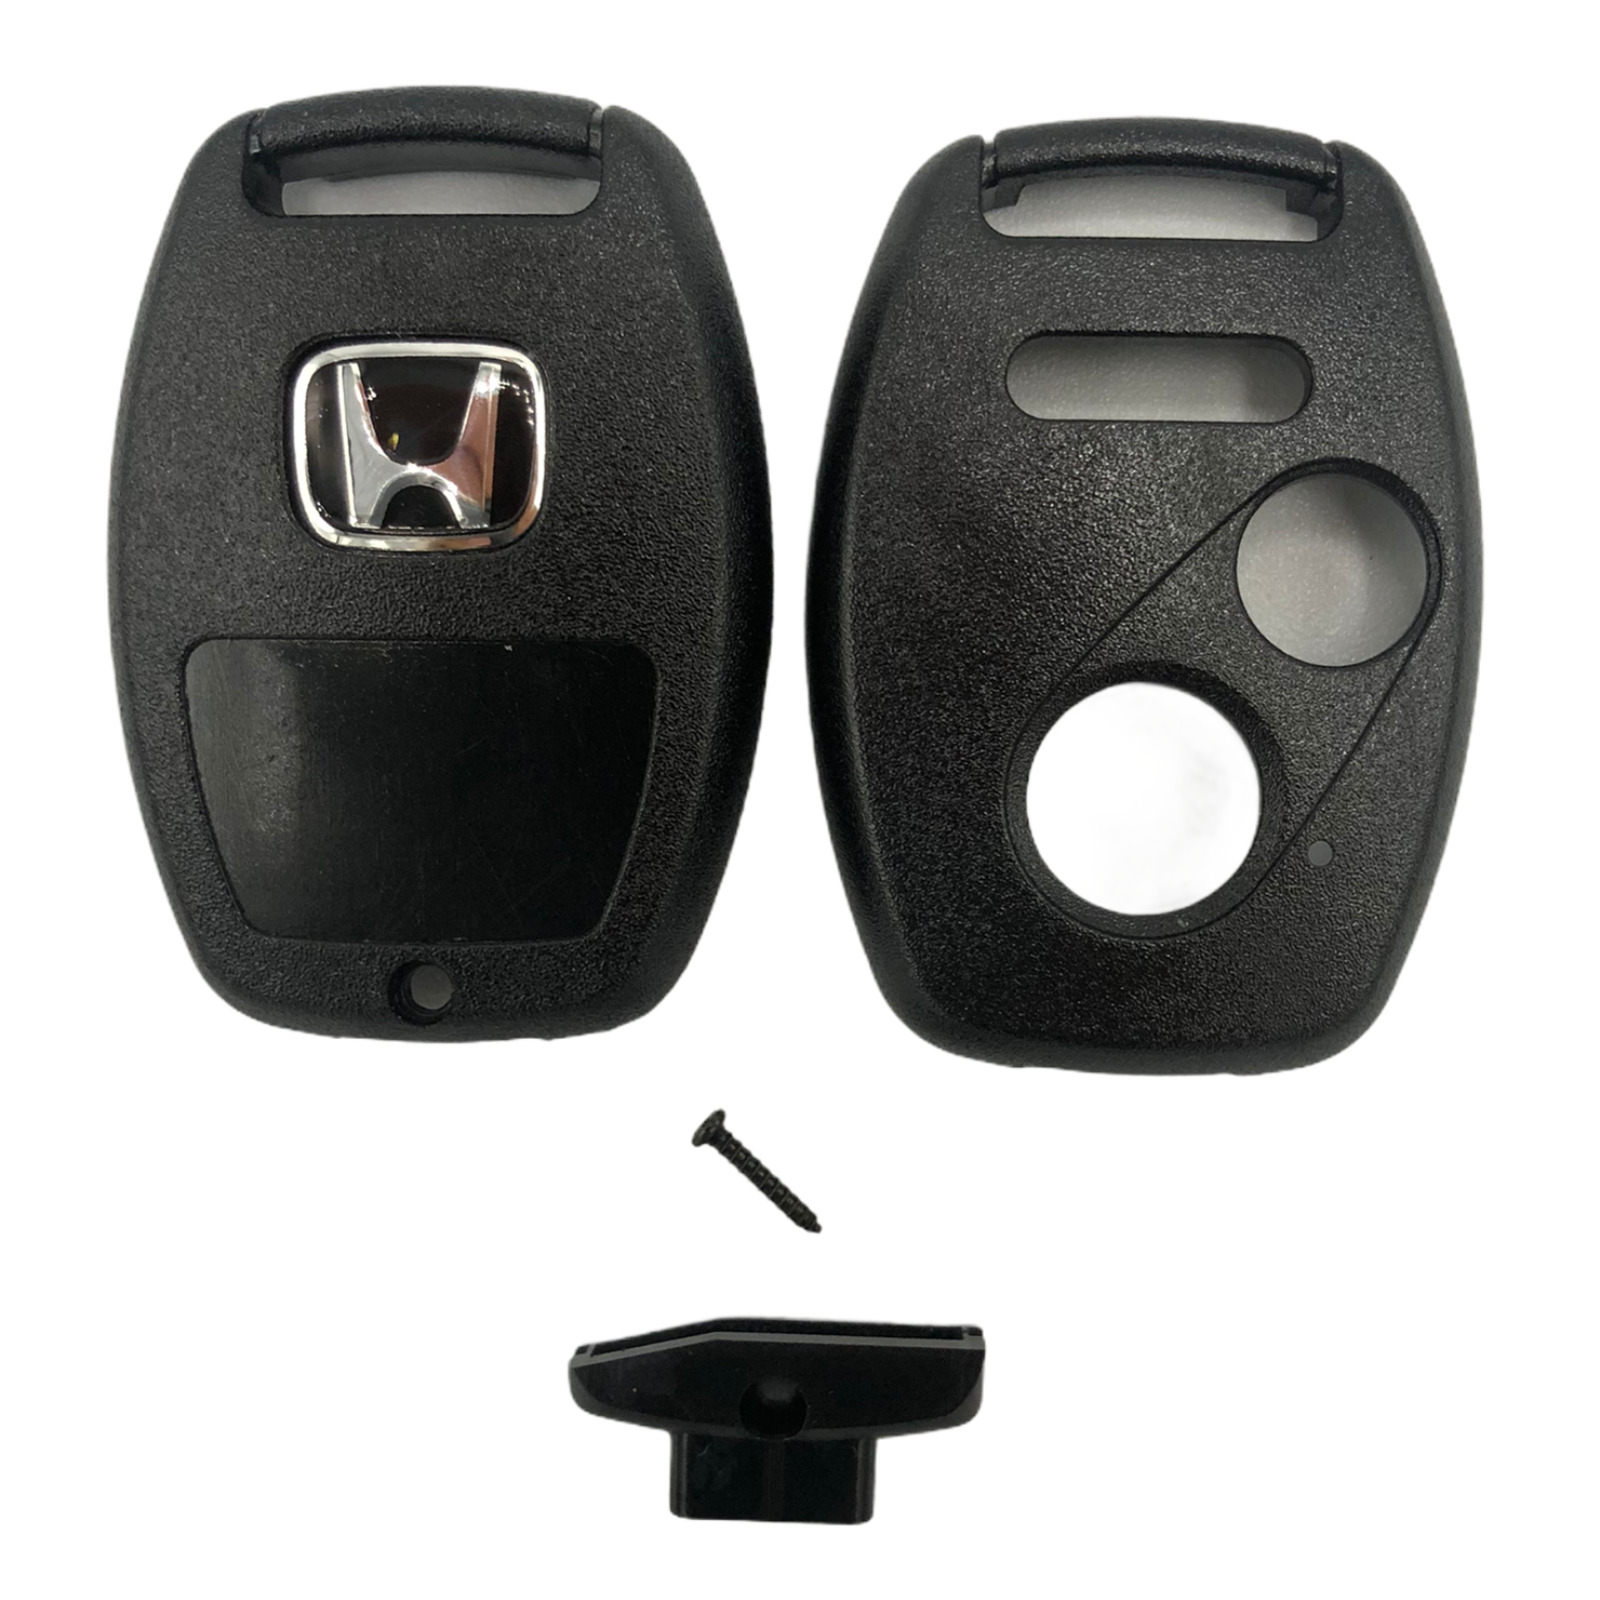 For 2006 -2011 Honda Civic LX CRV Odyssey Remote Key Fob Uncut Shell Case